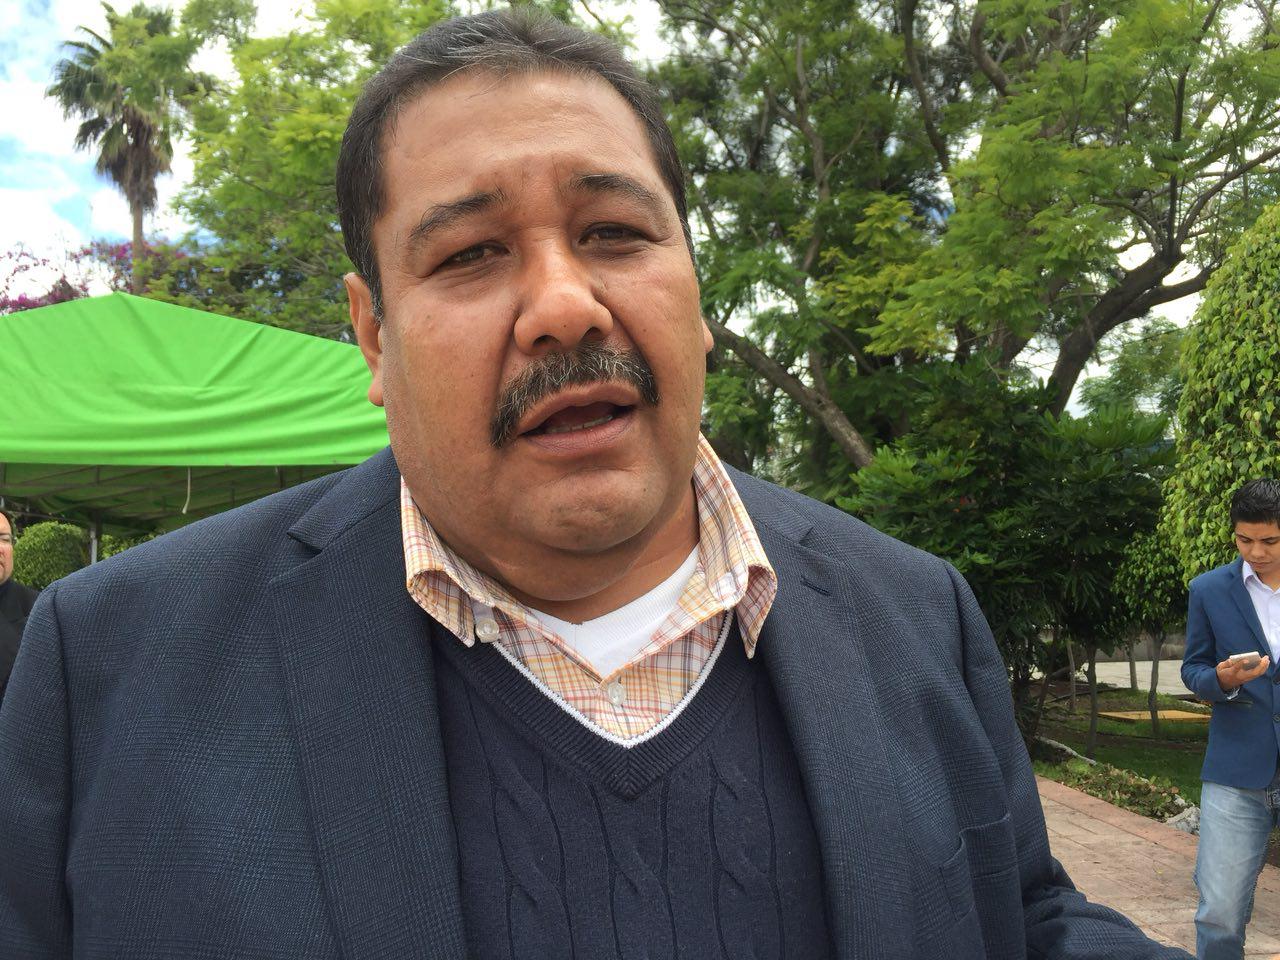  Arturo Castañeda descarta responsabilidad por correos apócrifos a nombre de Prensa UAQ